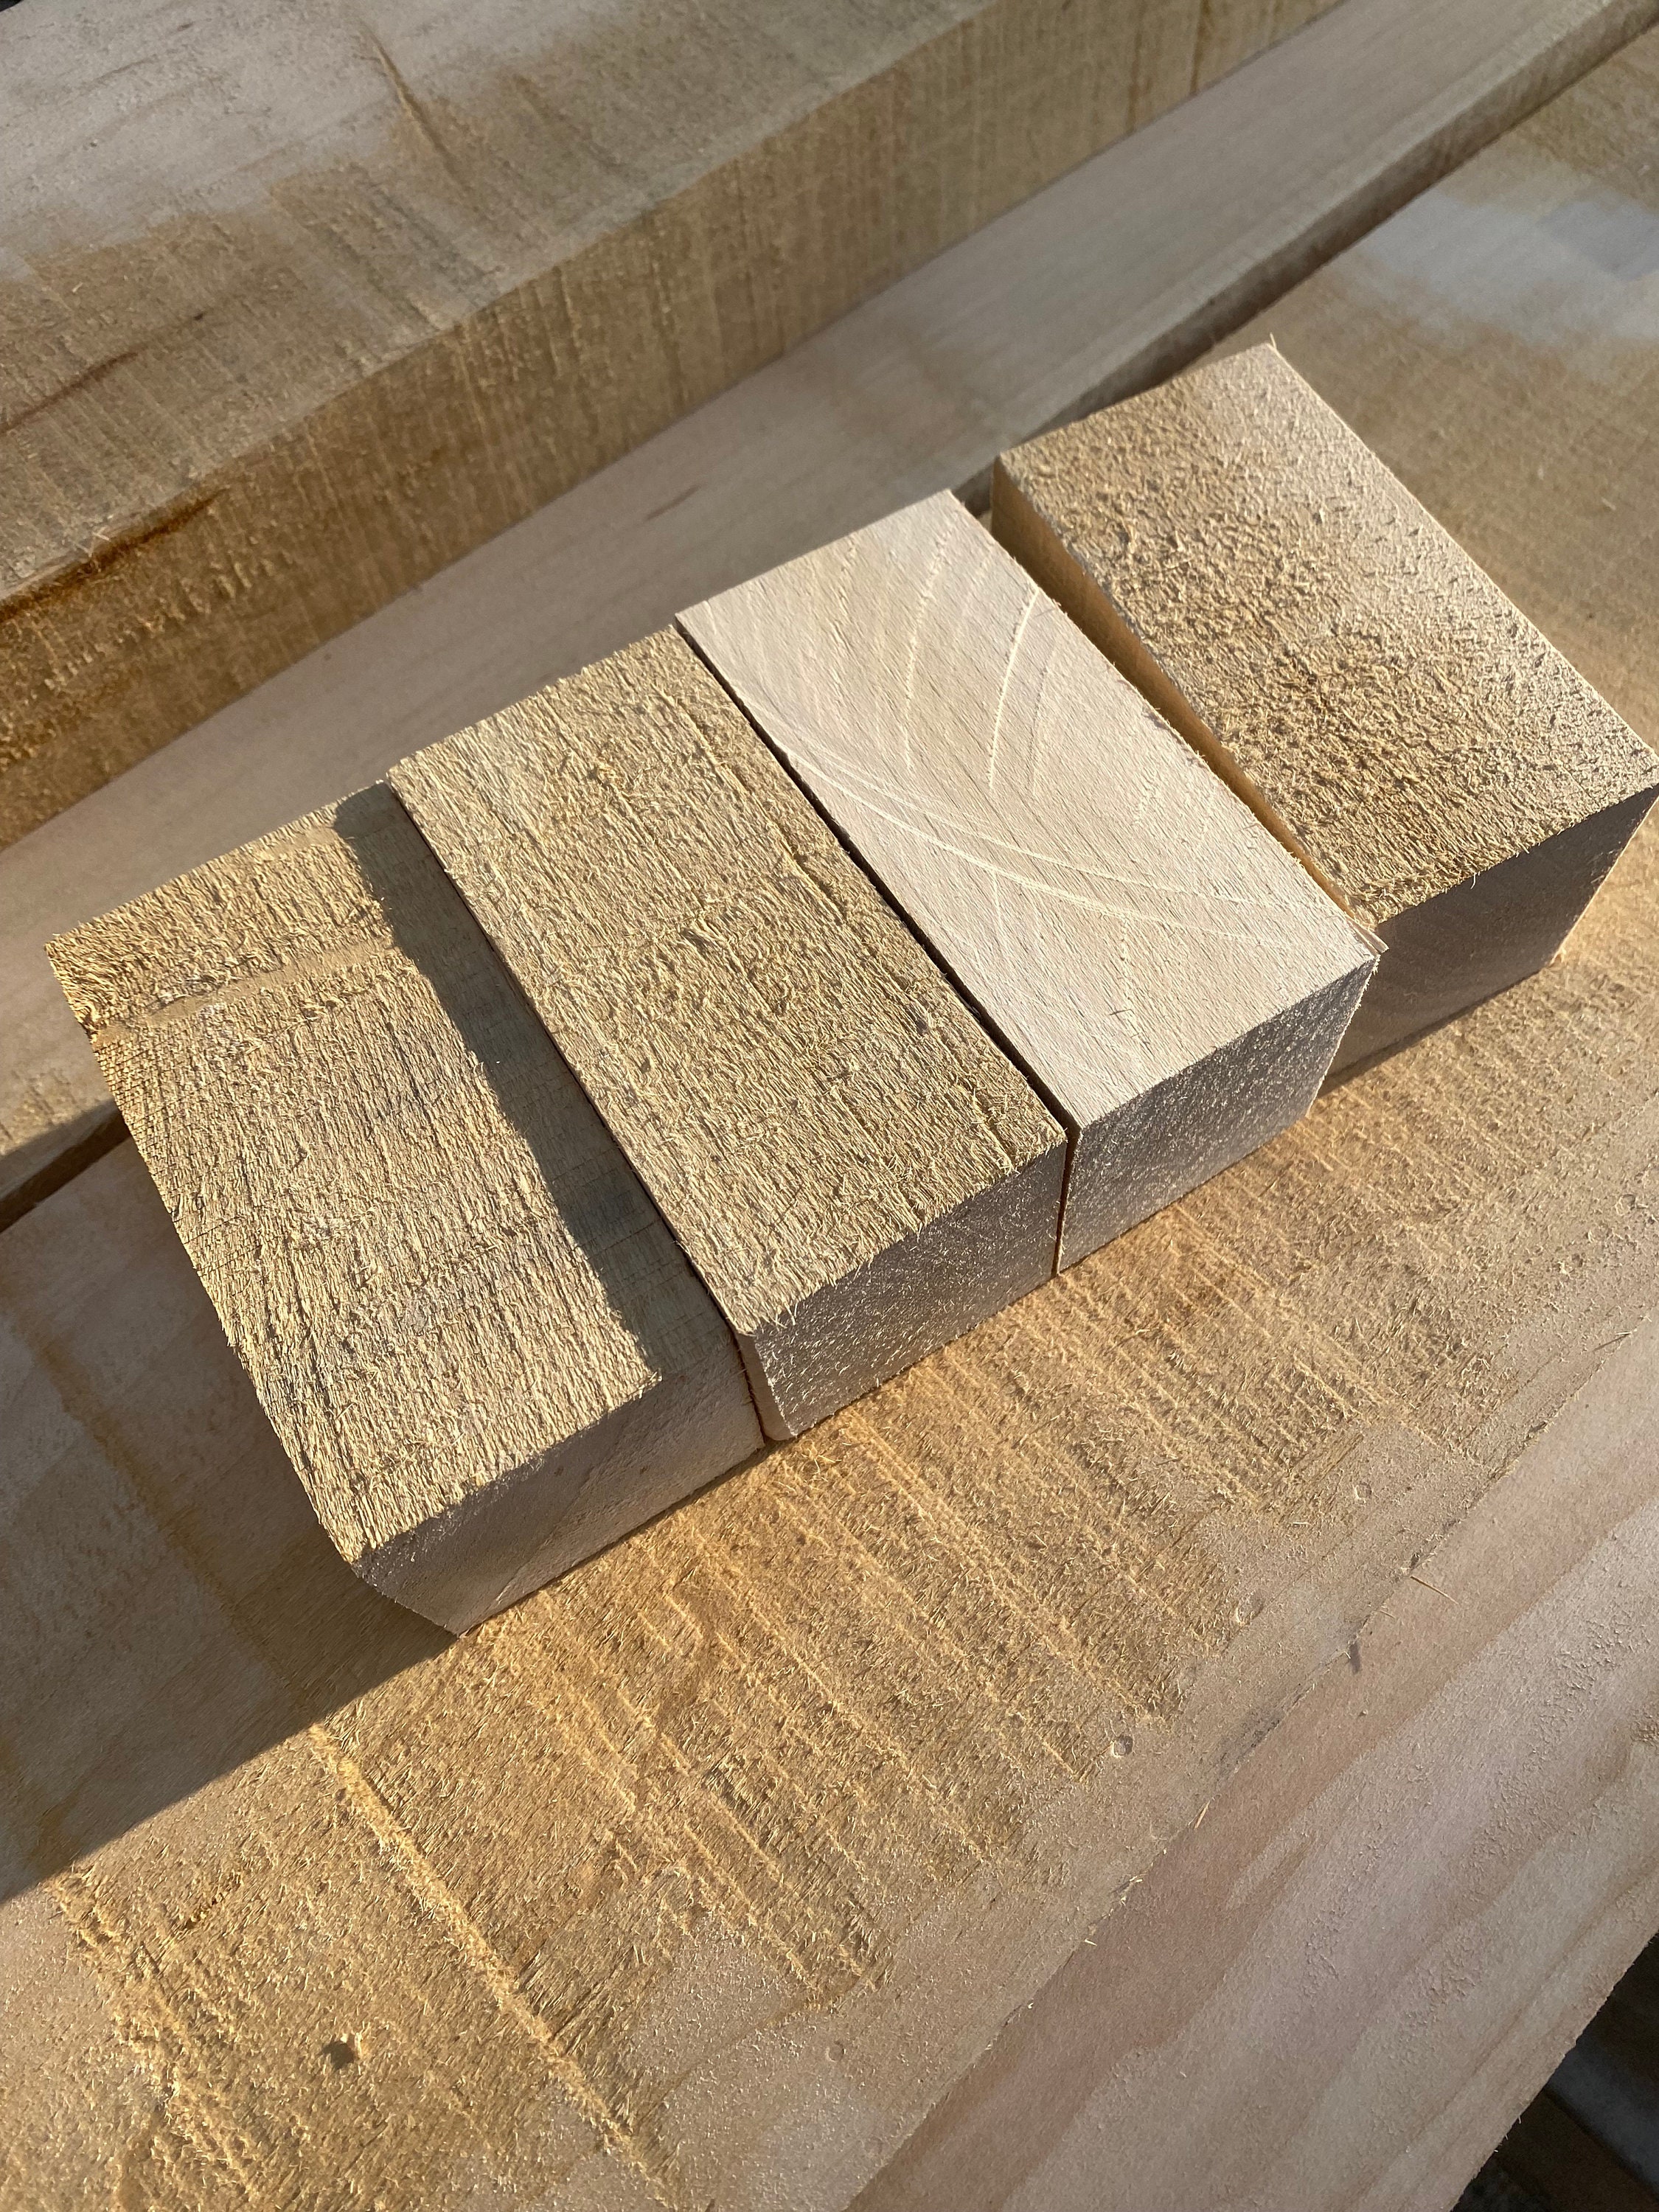 Set of Basswood Carving Blocks 12 pcs BW12 BeaverCraft